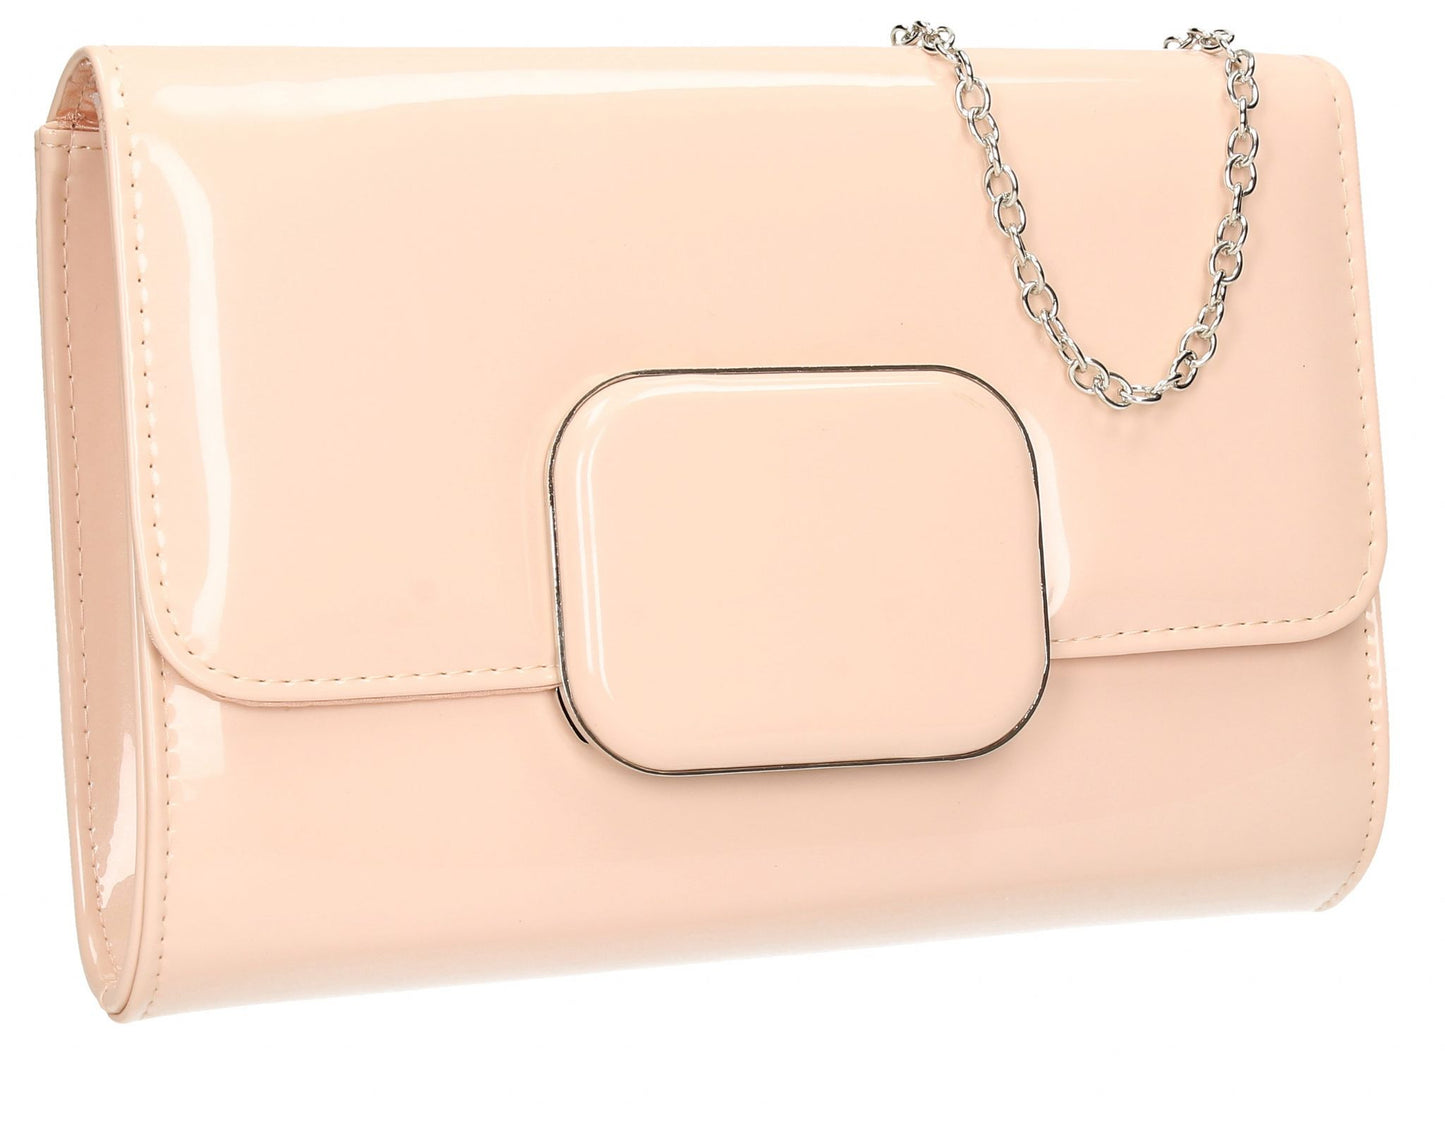 SWANKYSWANS Merci Clutch Bag Pink Beige Cute Cheap Clutch Bag For Weddings School and Work